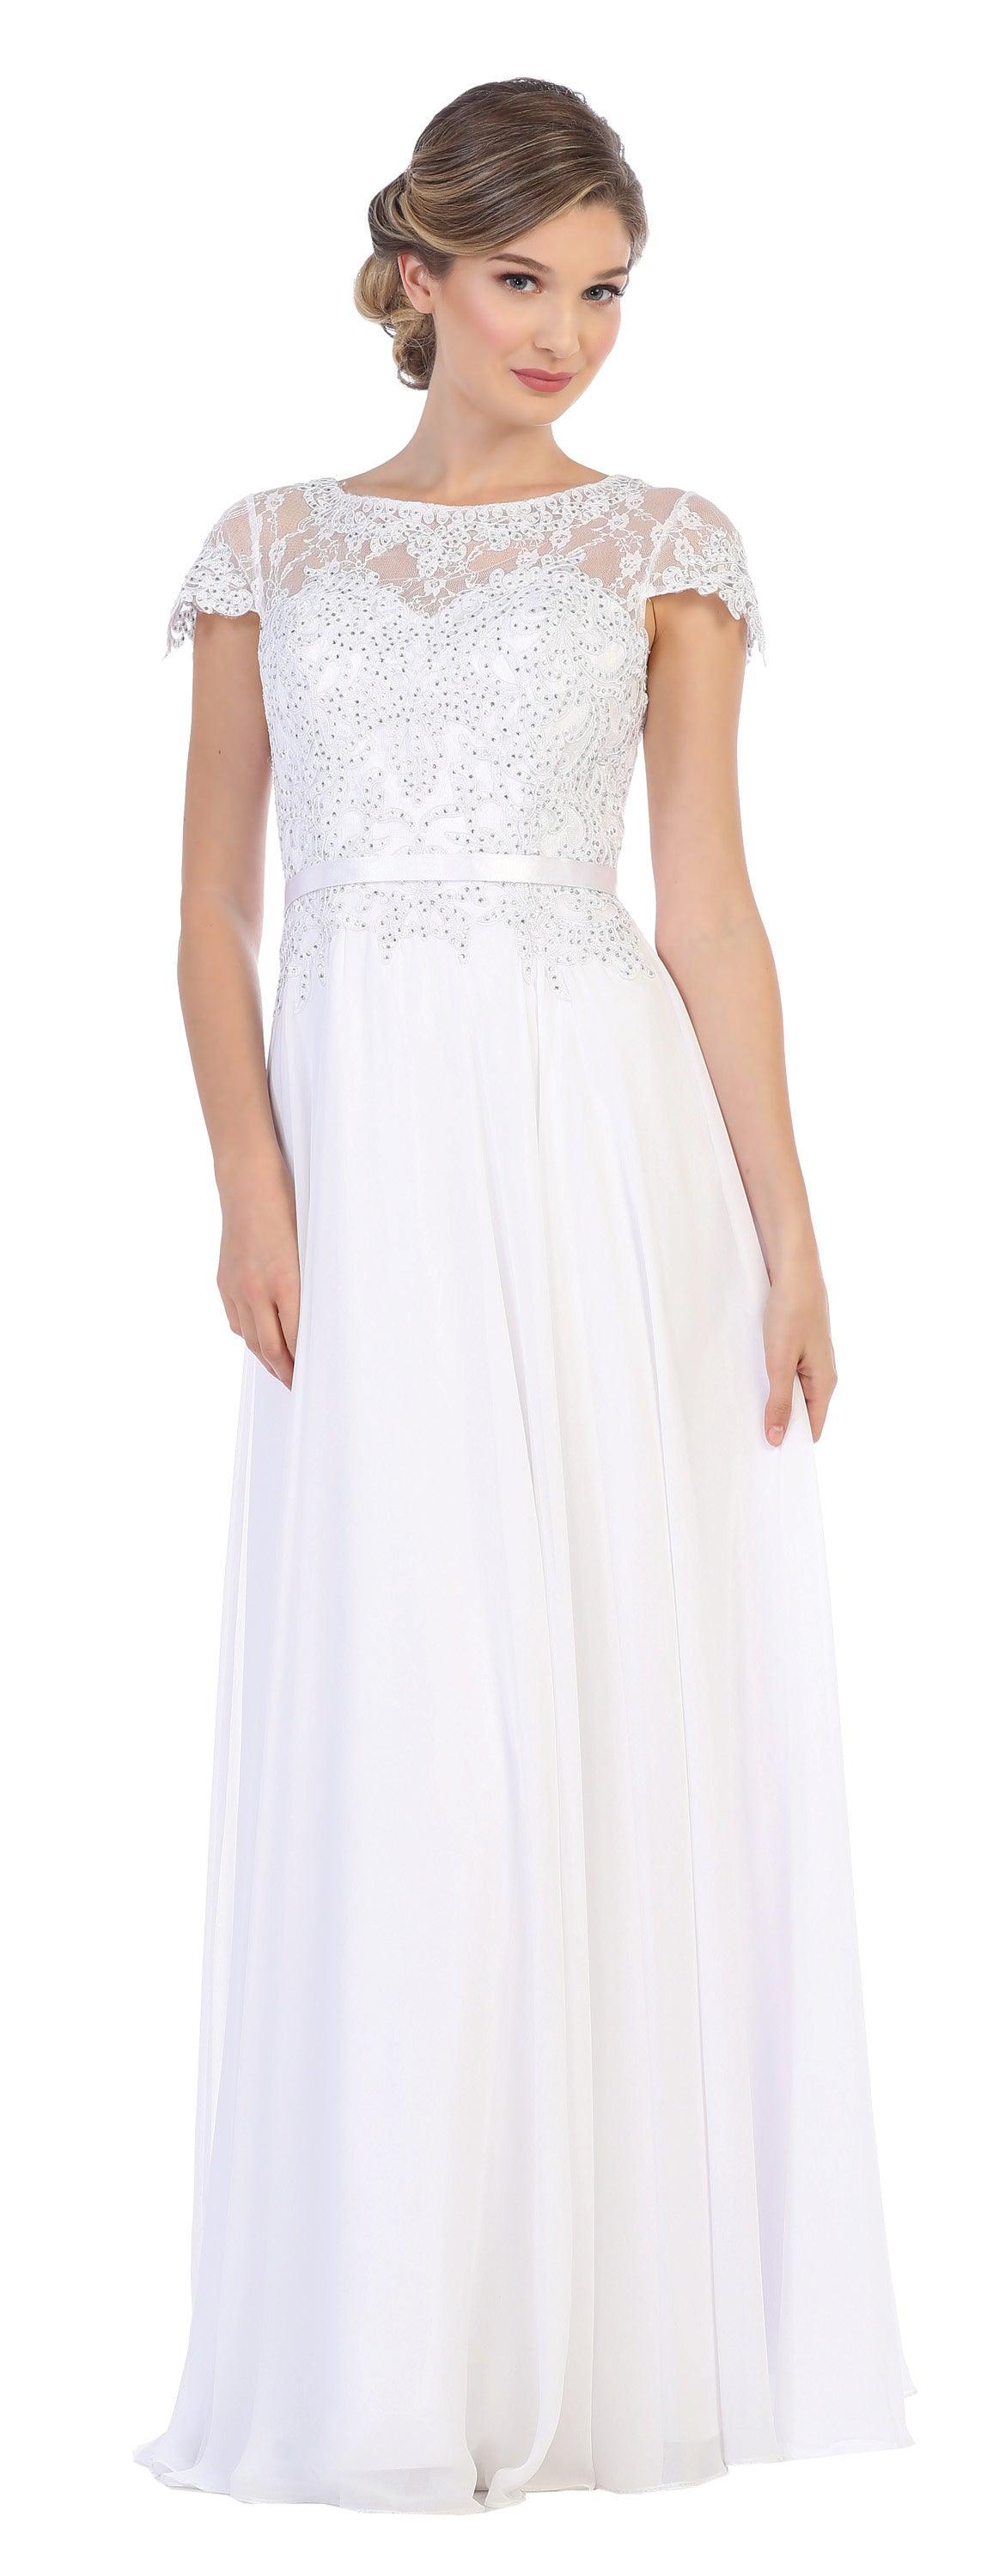 Long Bridal Gown Short Sleeve Chiffon Wedding Dress - The Dress Outlet